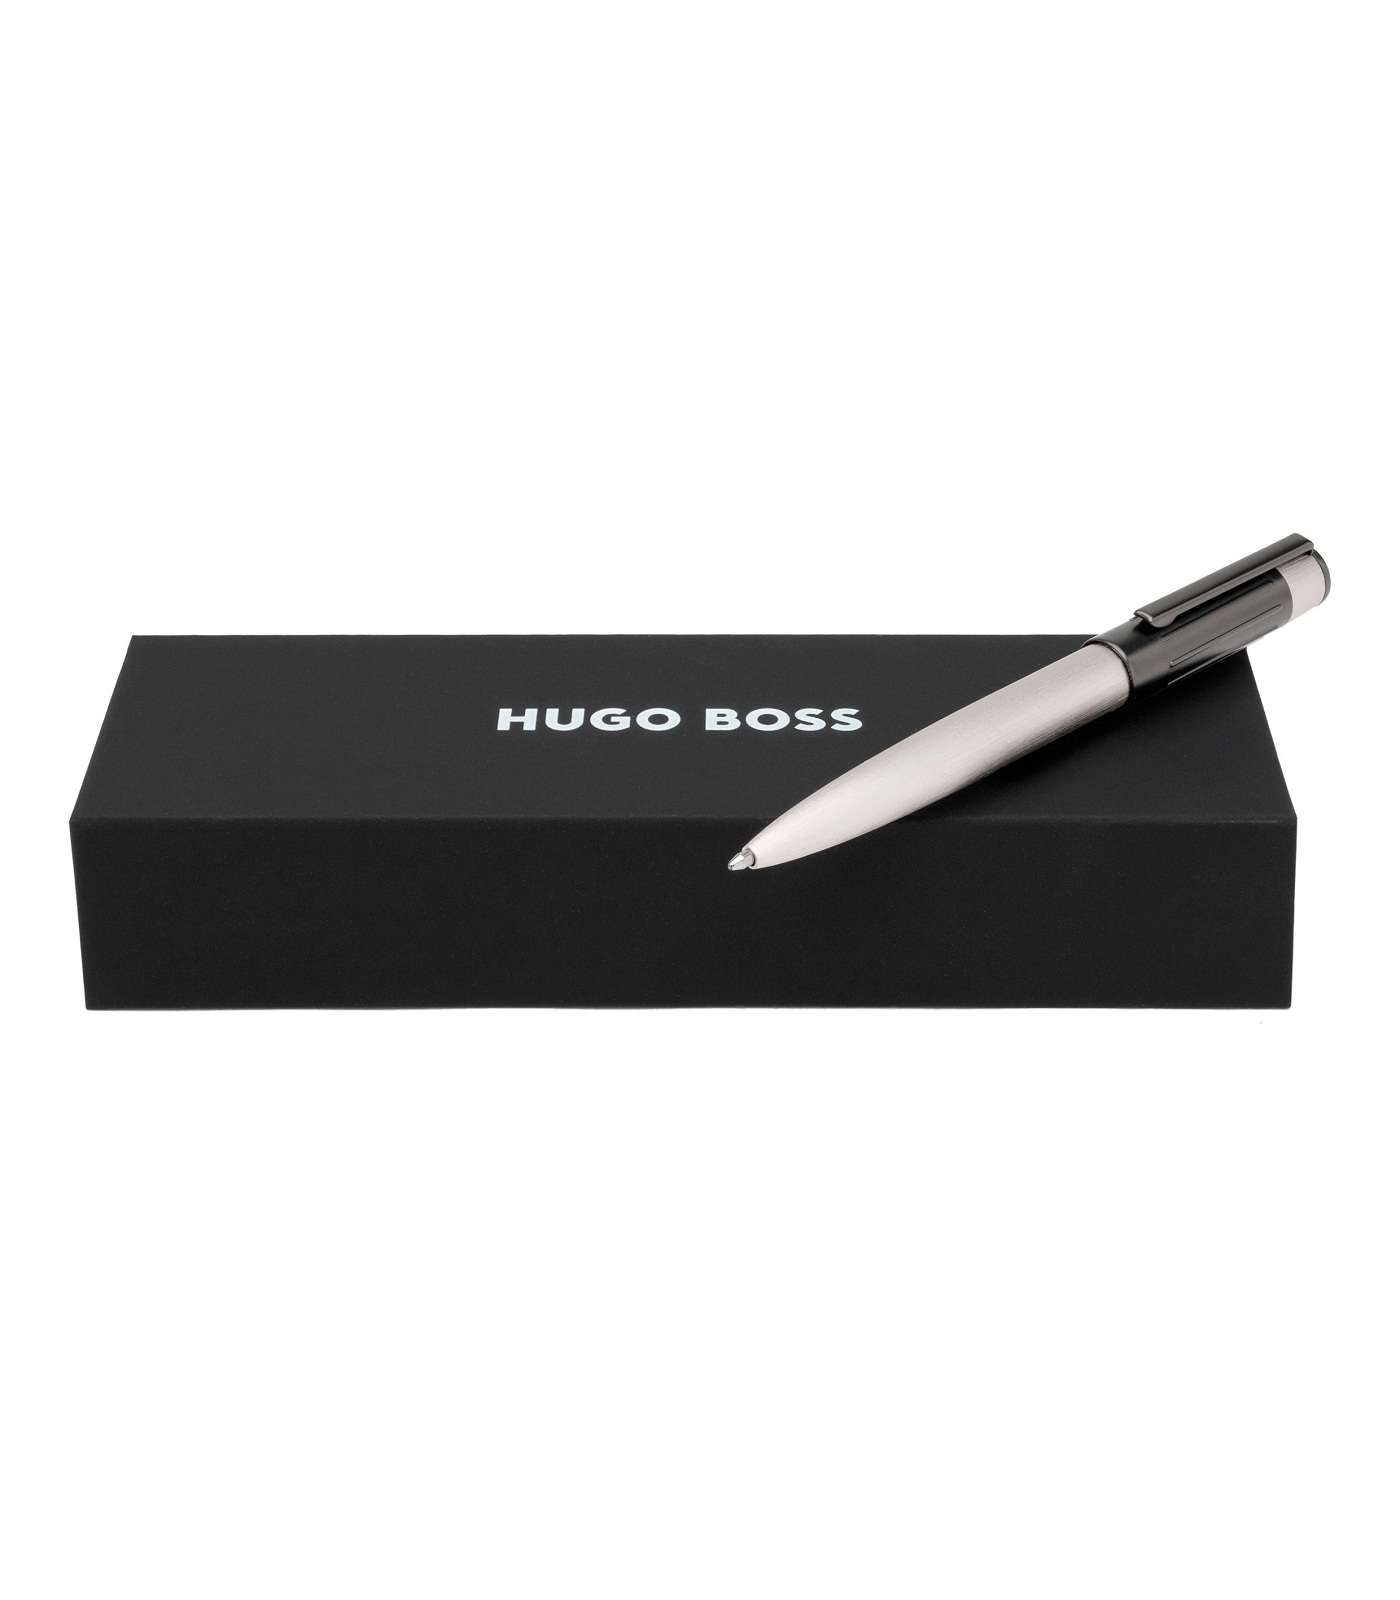 HUGO BOSS Ballpoint pen Gear Ribs Chrome